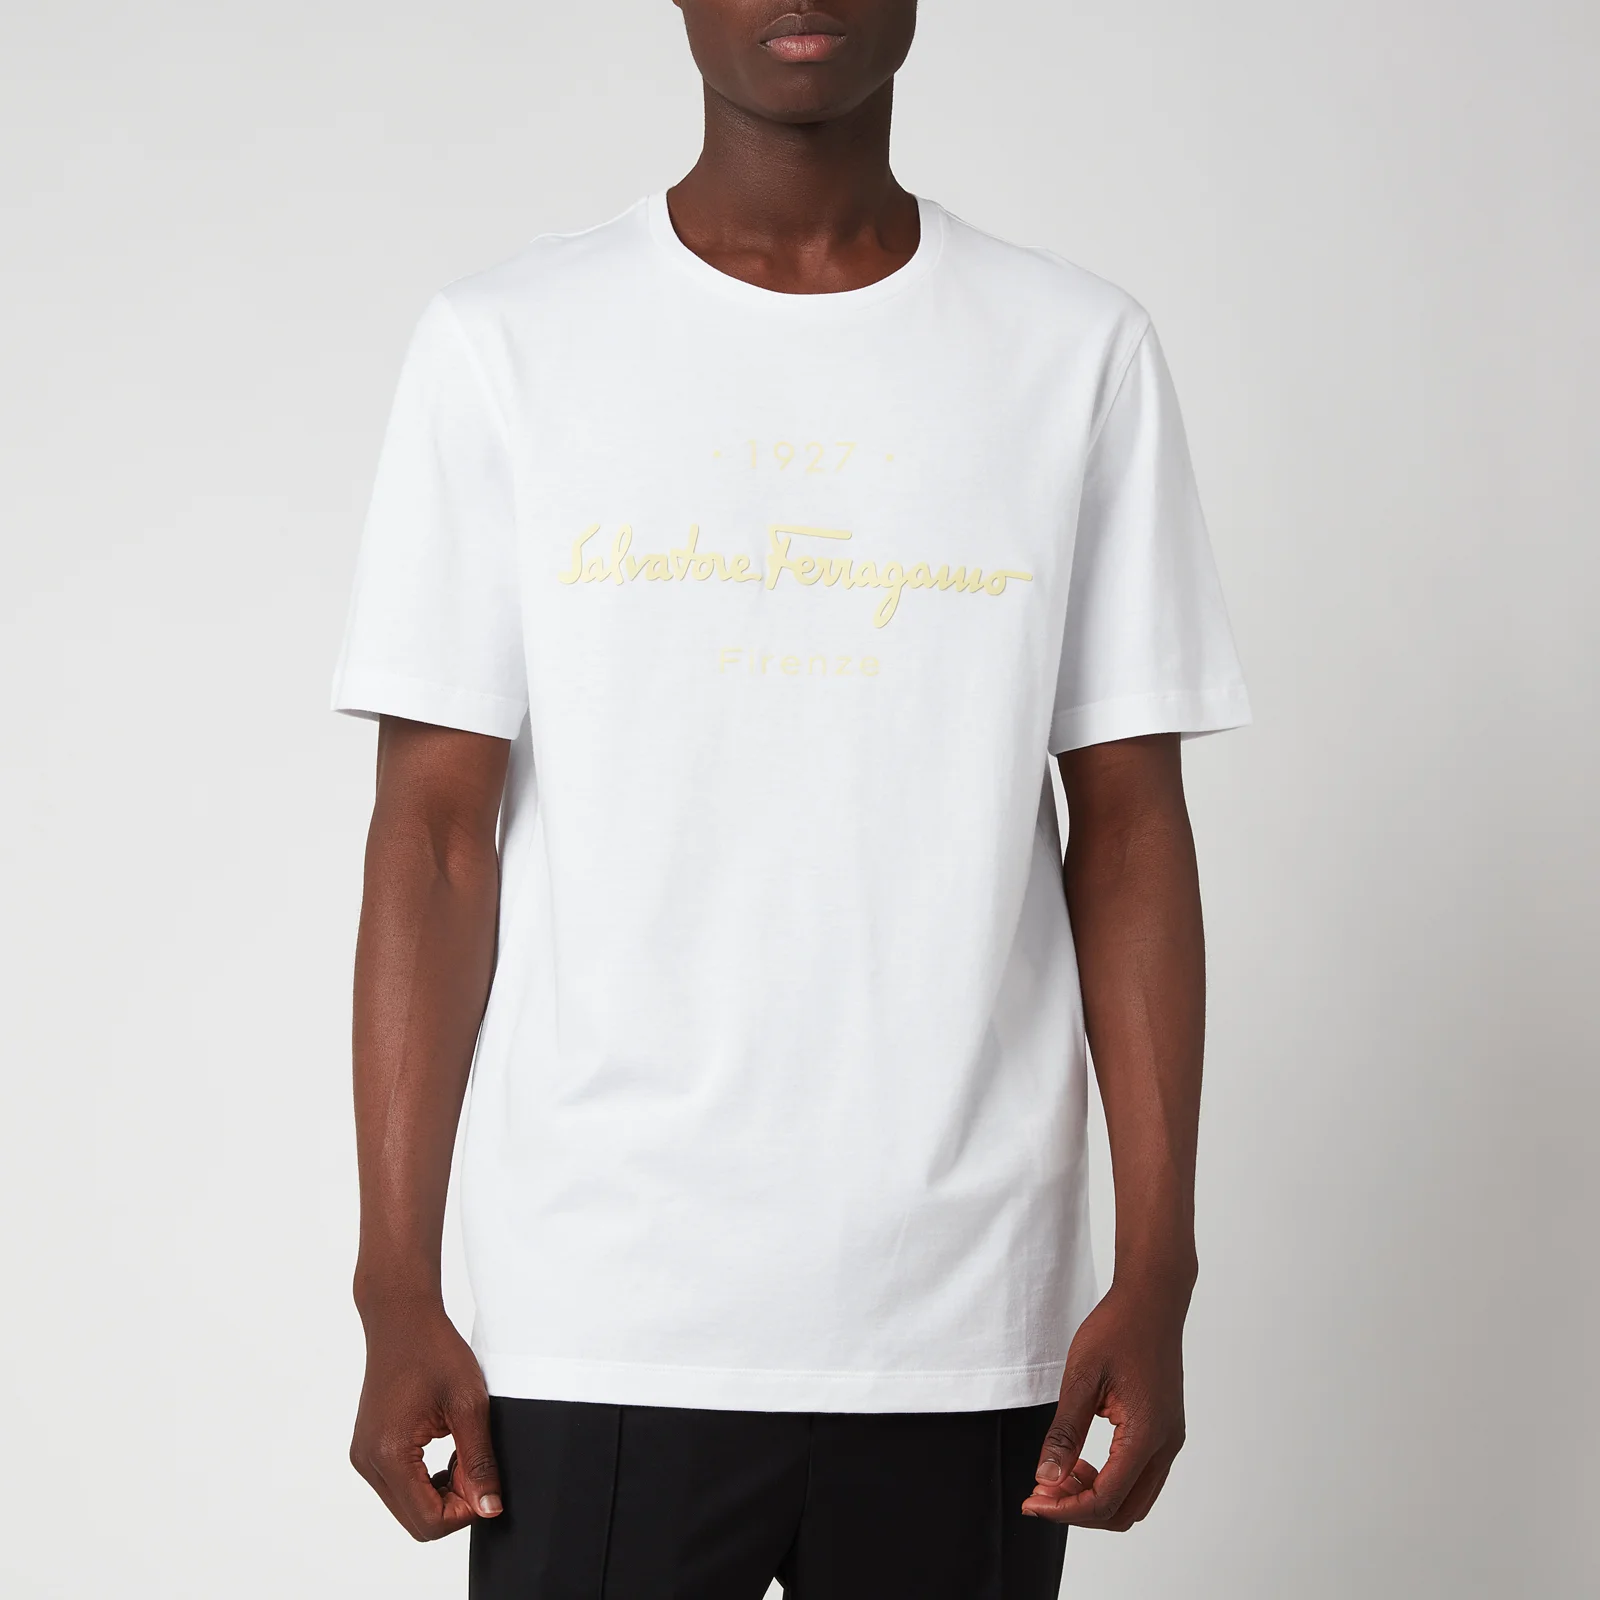 Ferragamo Men's 1927 Signature T-Shirt - White/Yellow Image 1